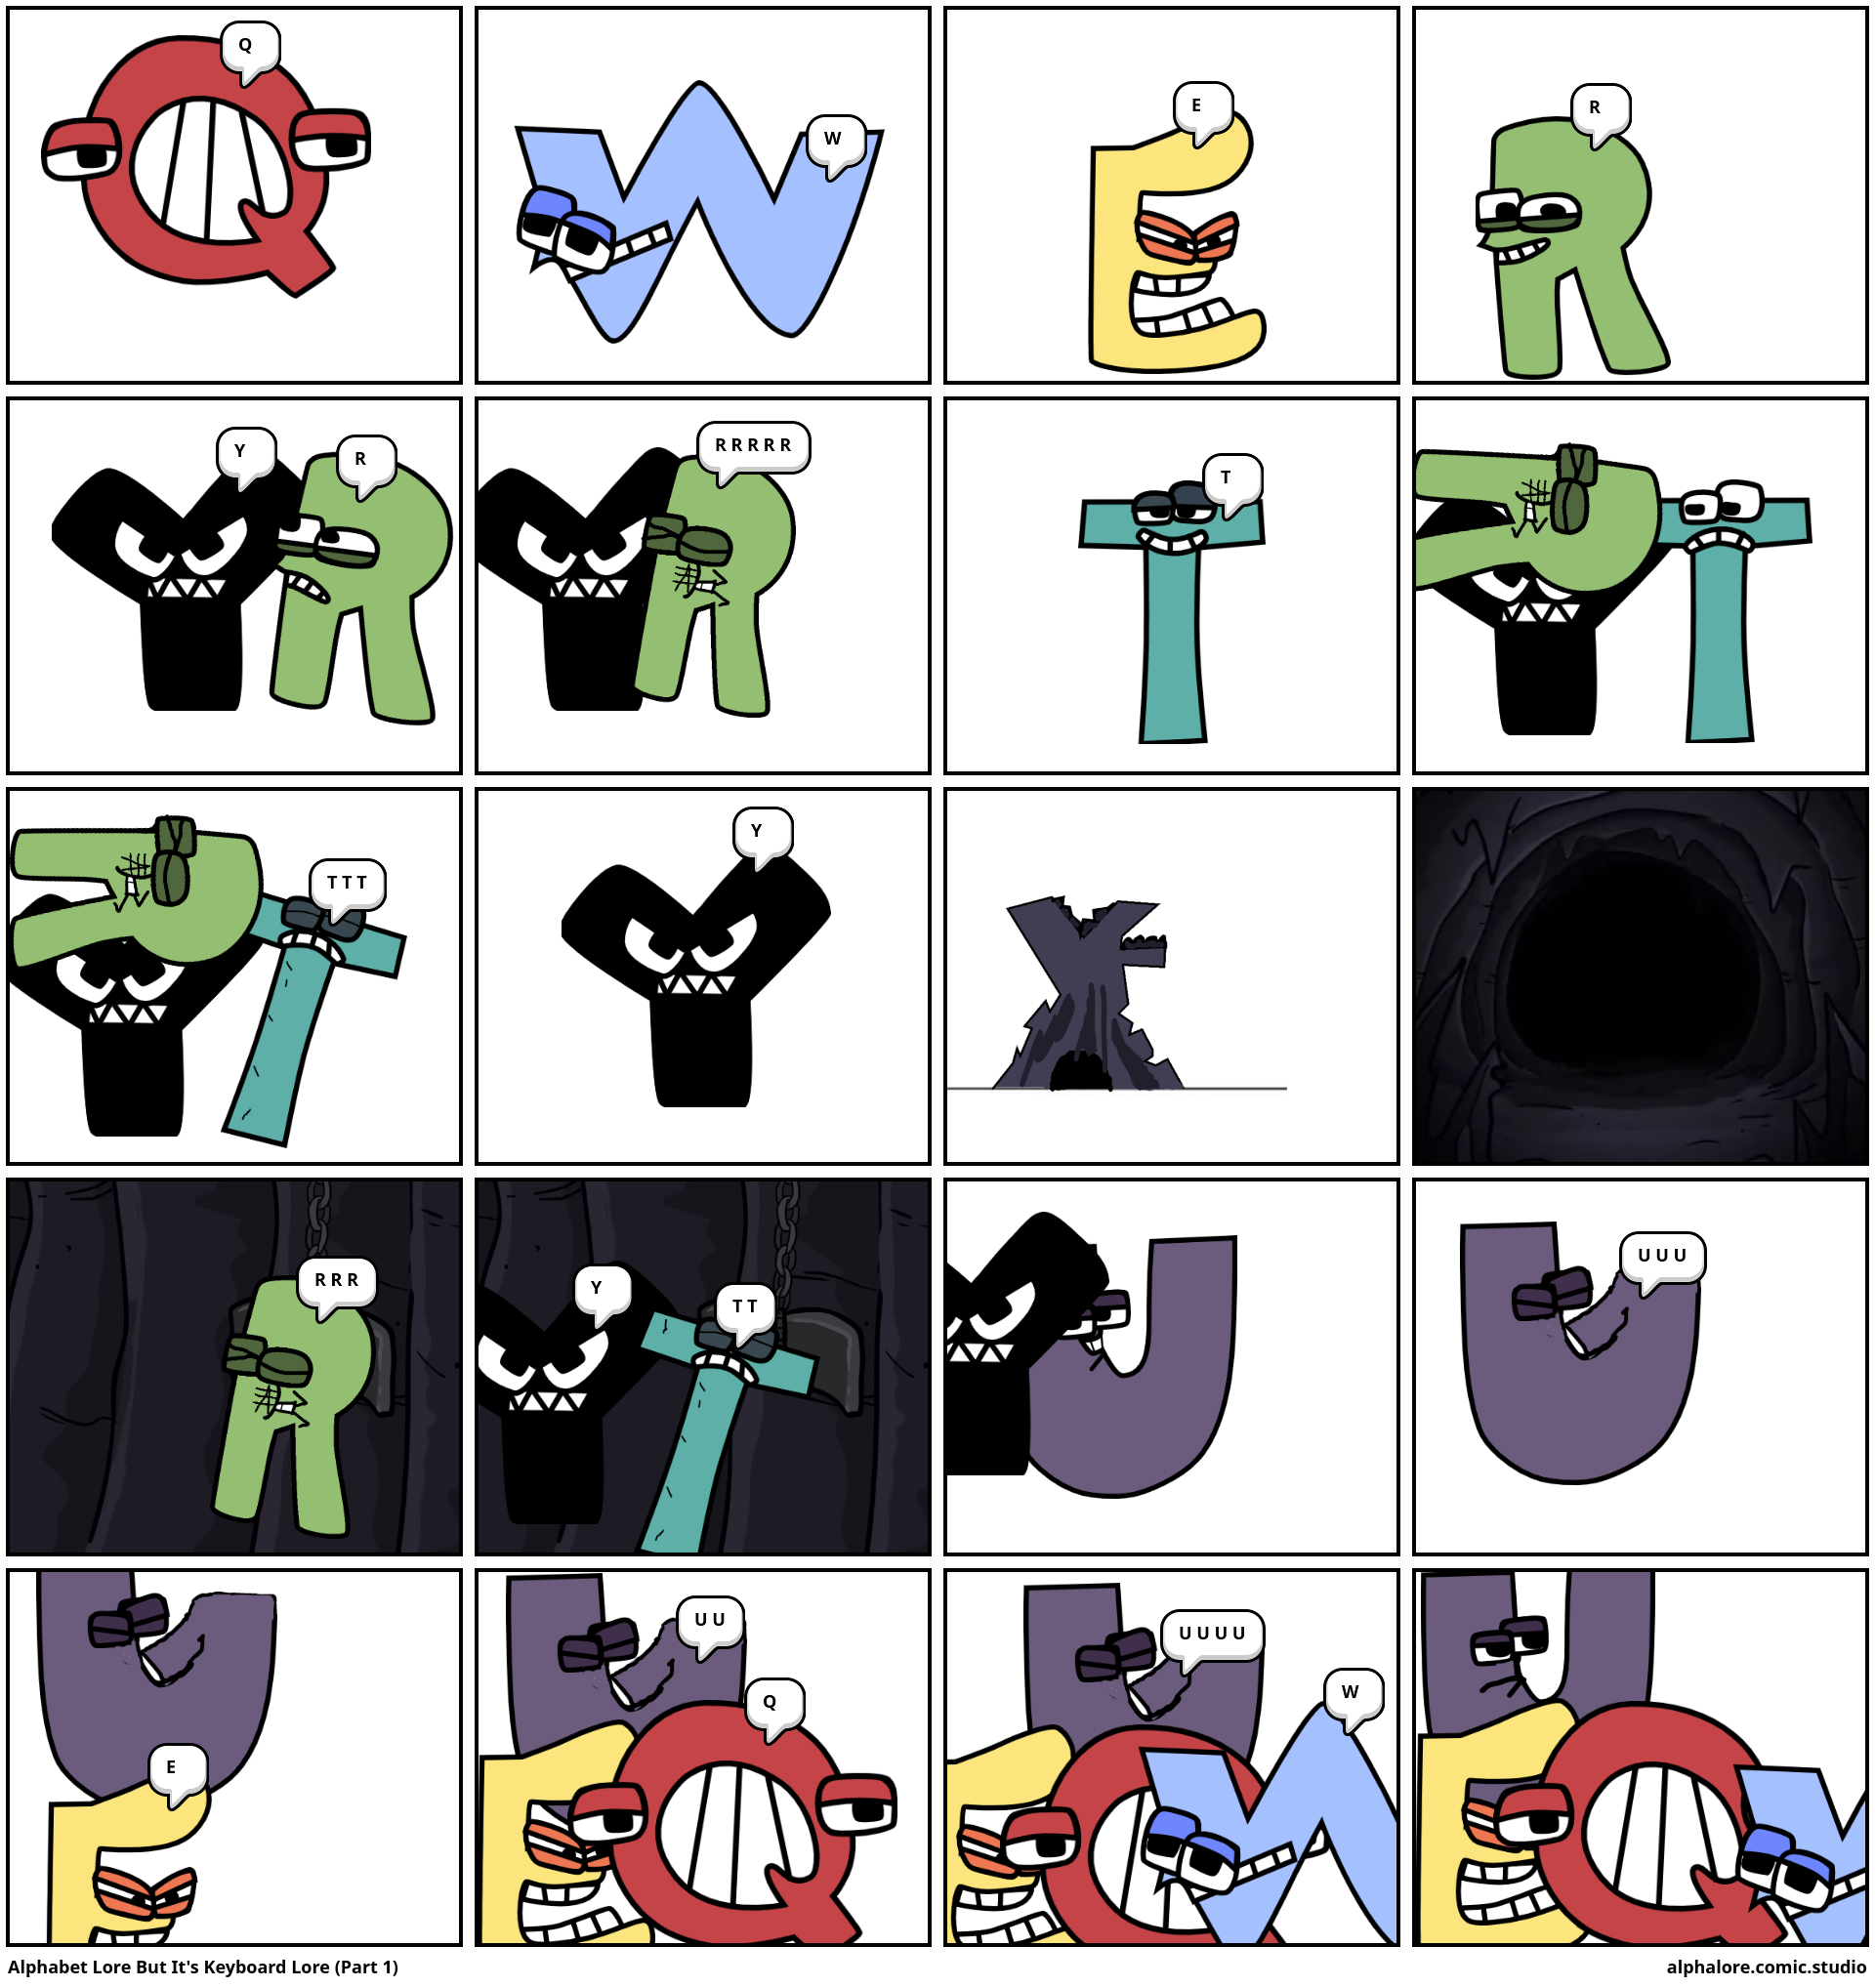 keyboard alphabet lore my verson - Comic Studio